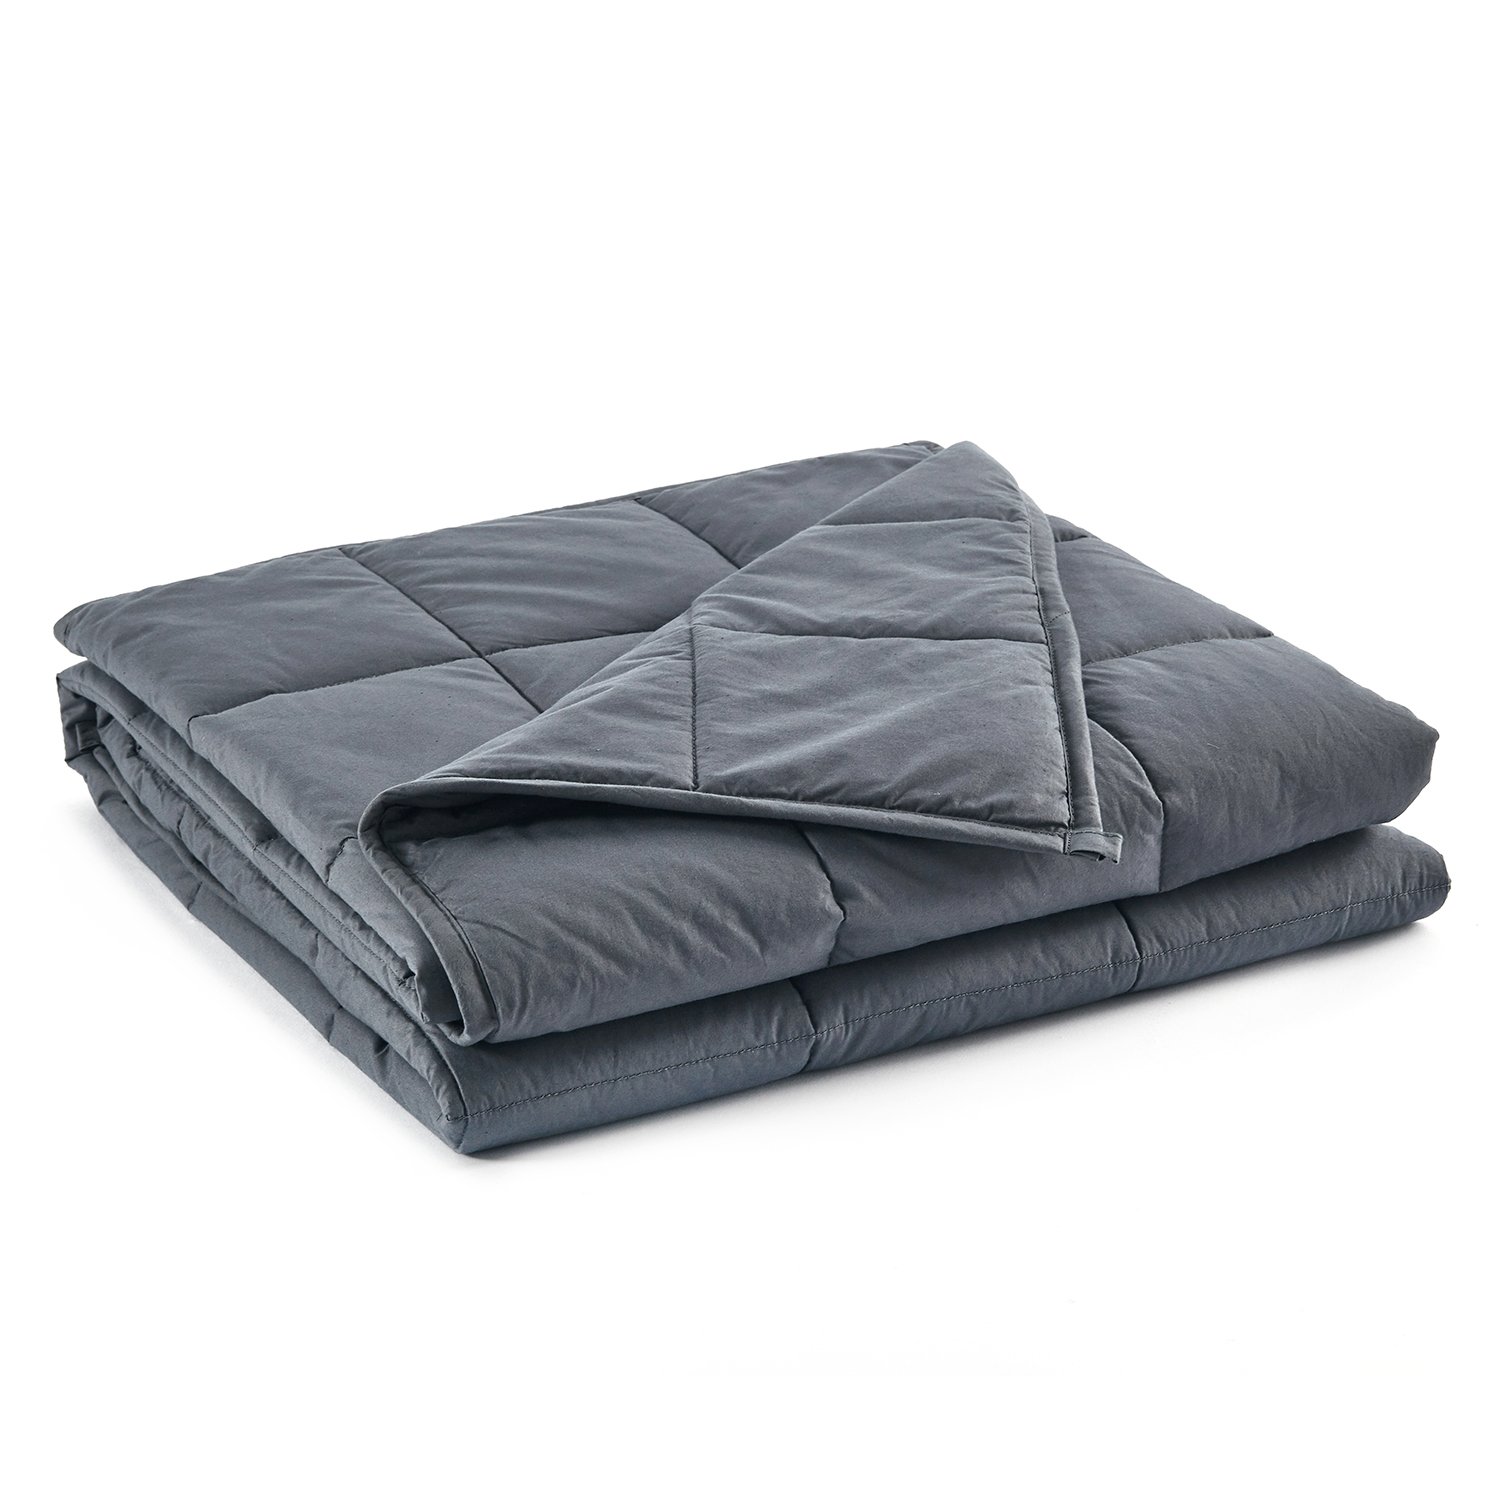 Premium Cotton Weighted Blanket 41X60"10LB Enjoy Natural Deep Sleep